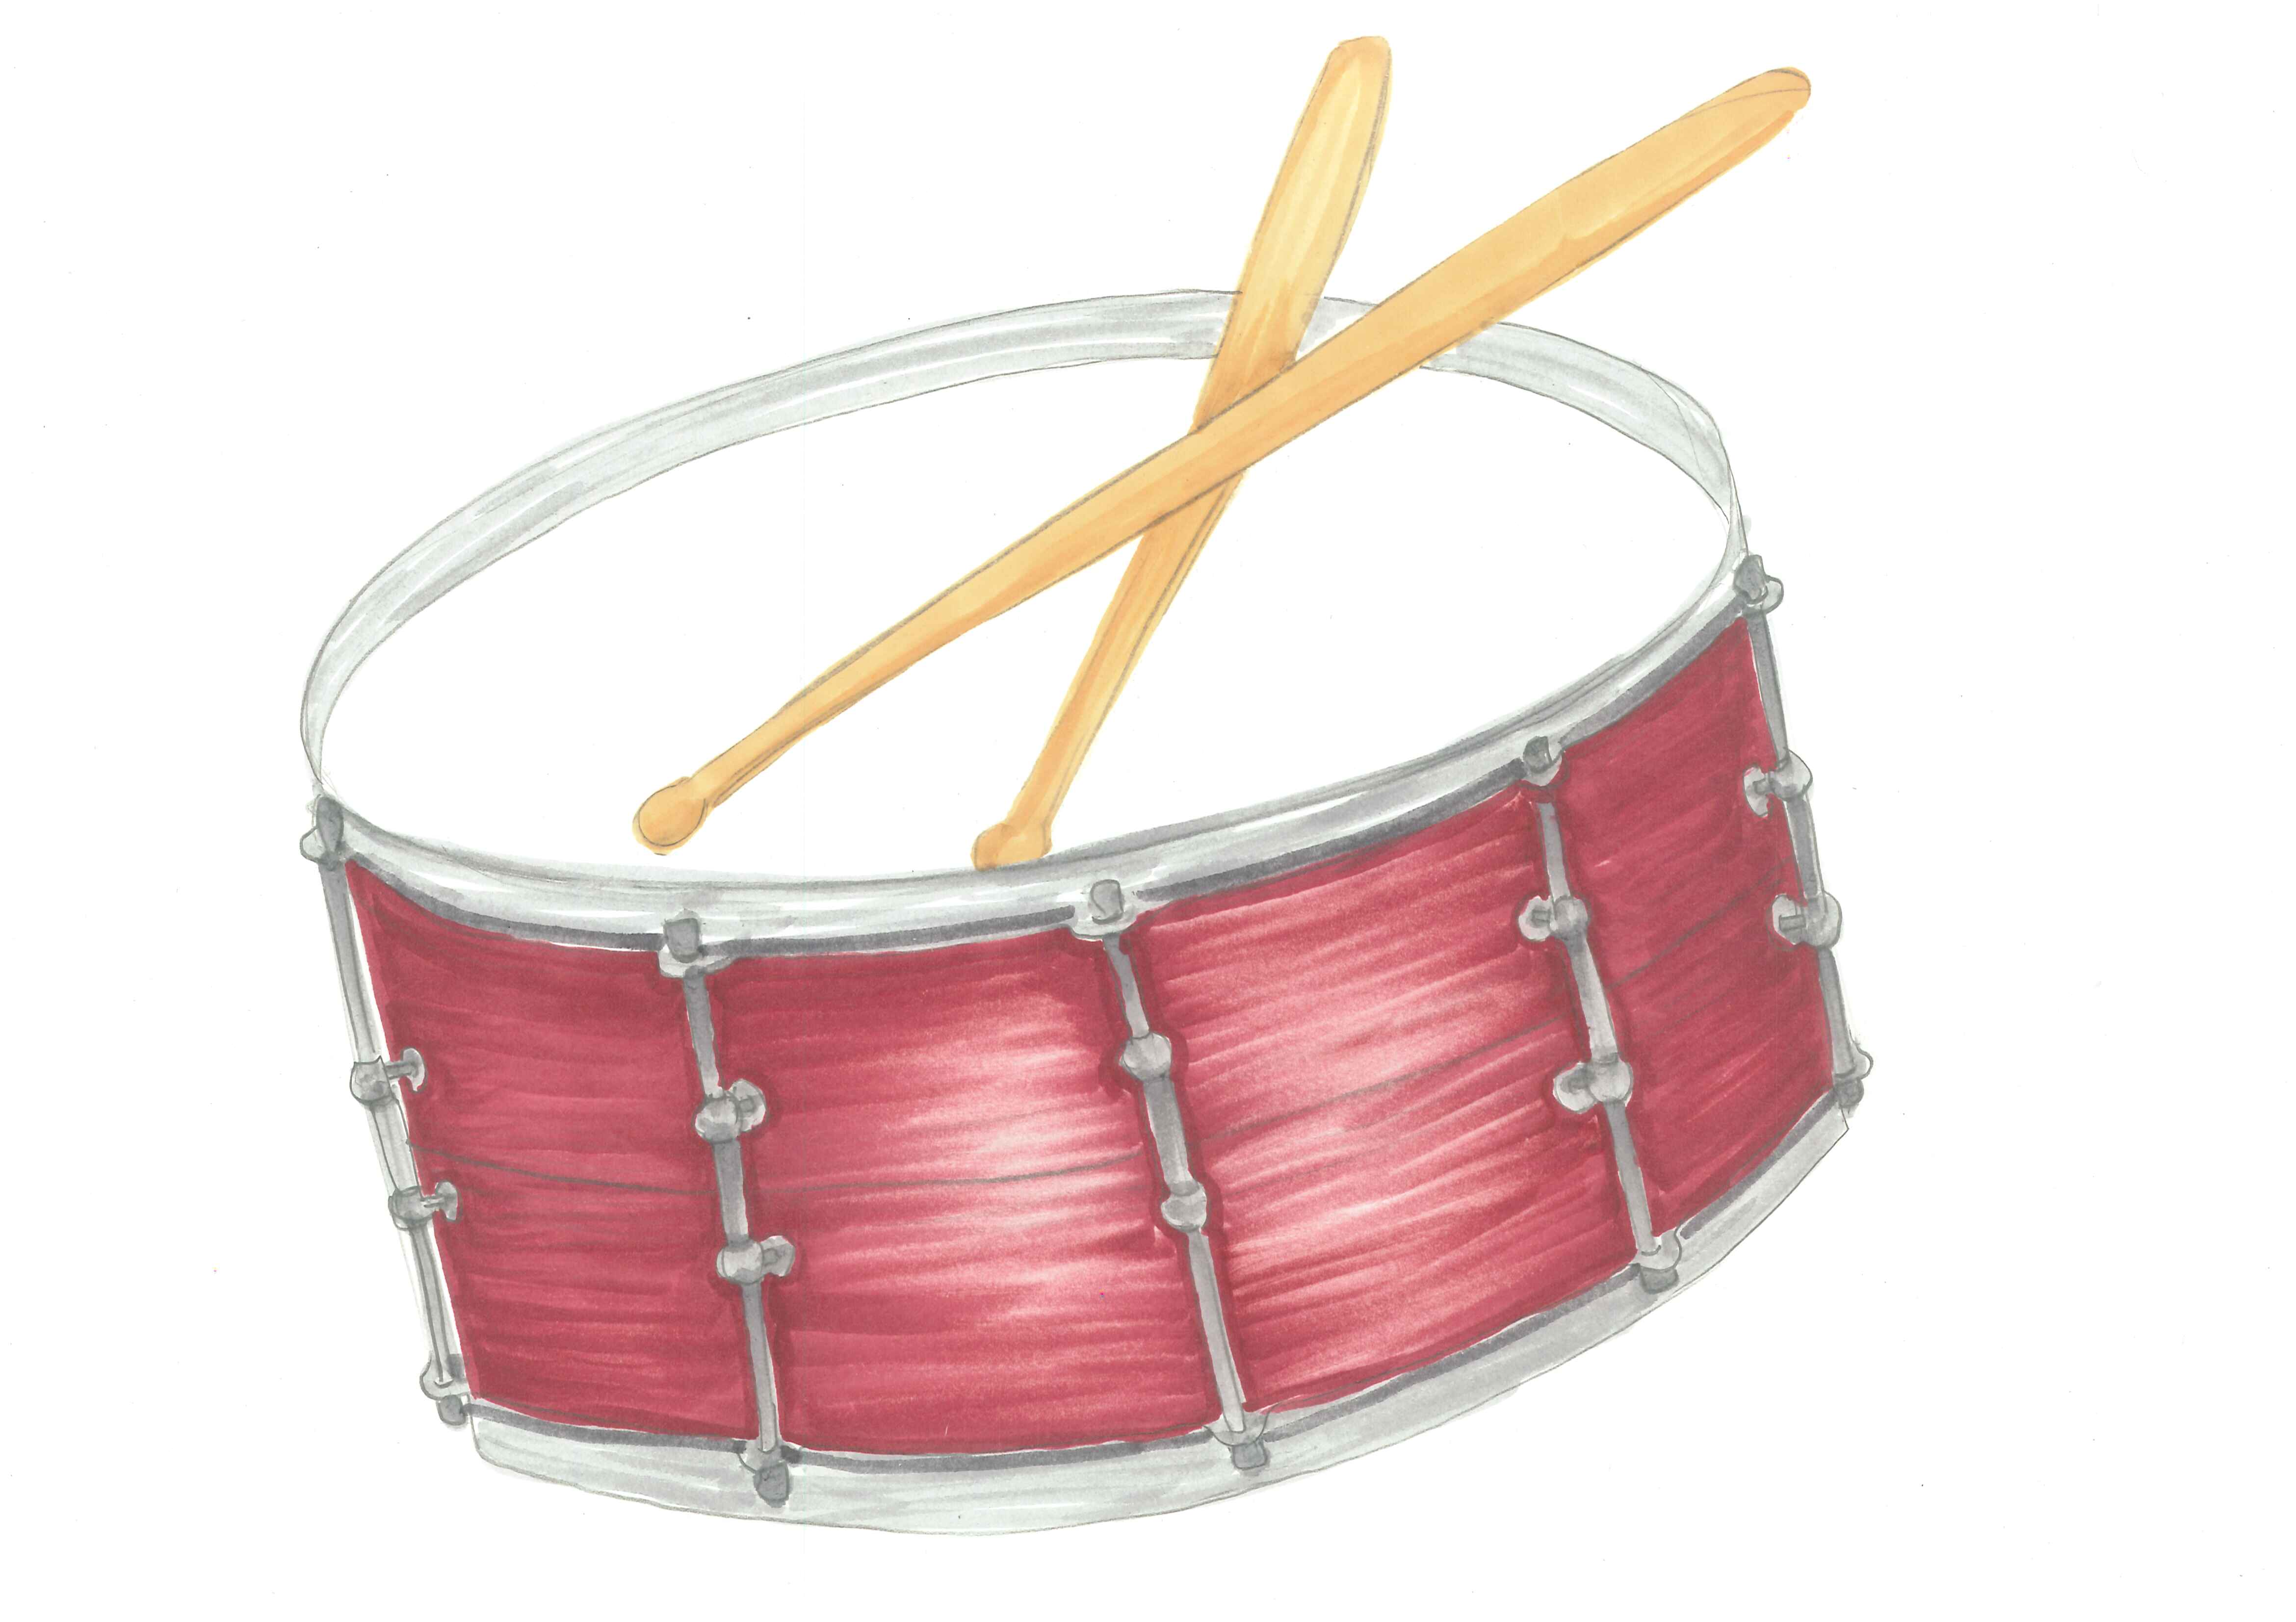 Drum Instruments Clipart. Sna